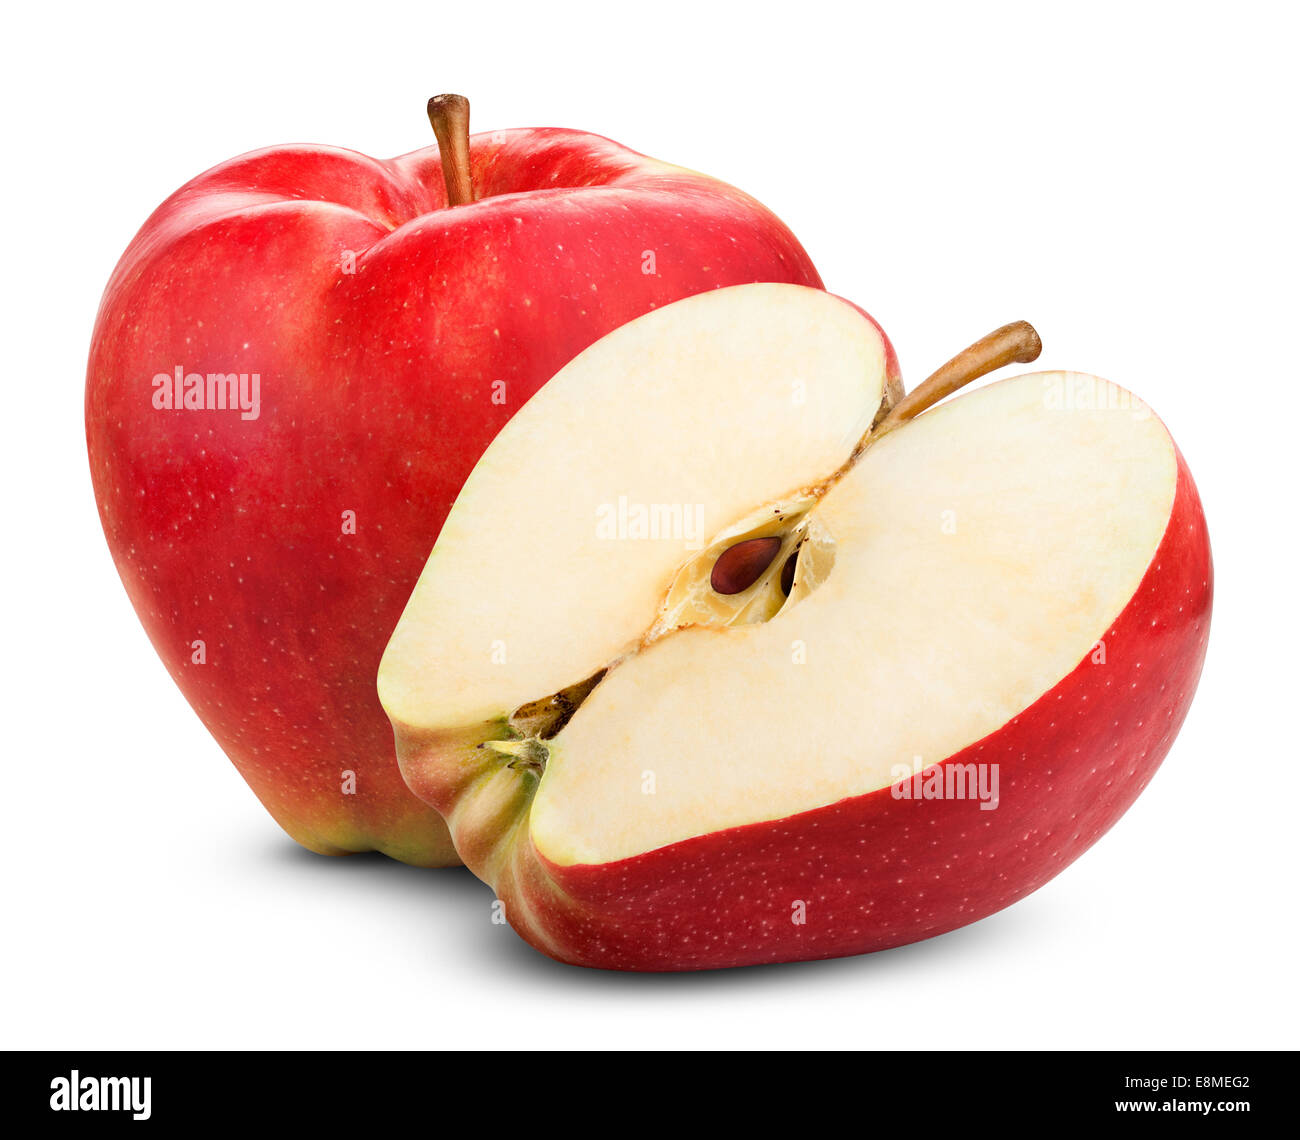 https://c8.alamy.com/comp/E8MEG2/fresh-ripe-red-apple-isolated-on-a-white-background-clipping-path-E8MEG2.jpg